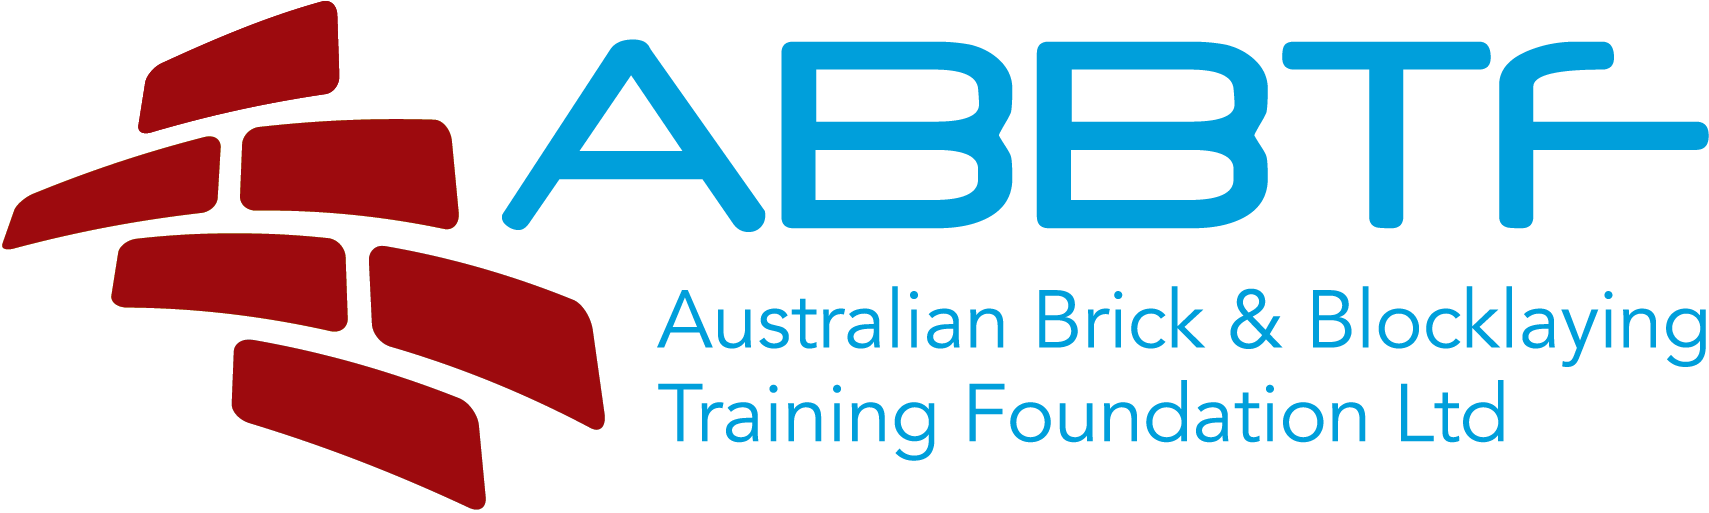 abbtf-logo-new